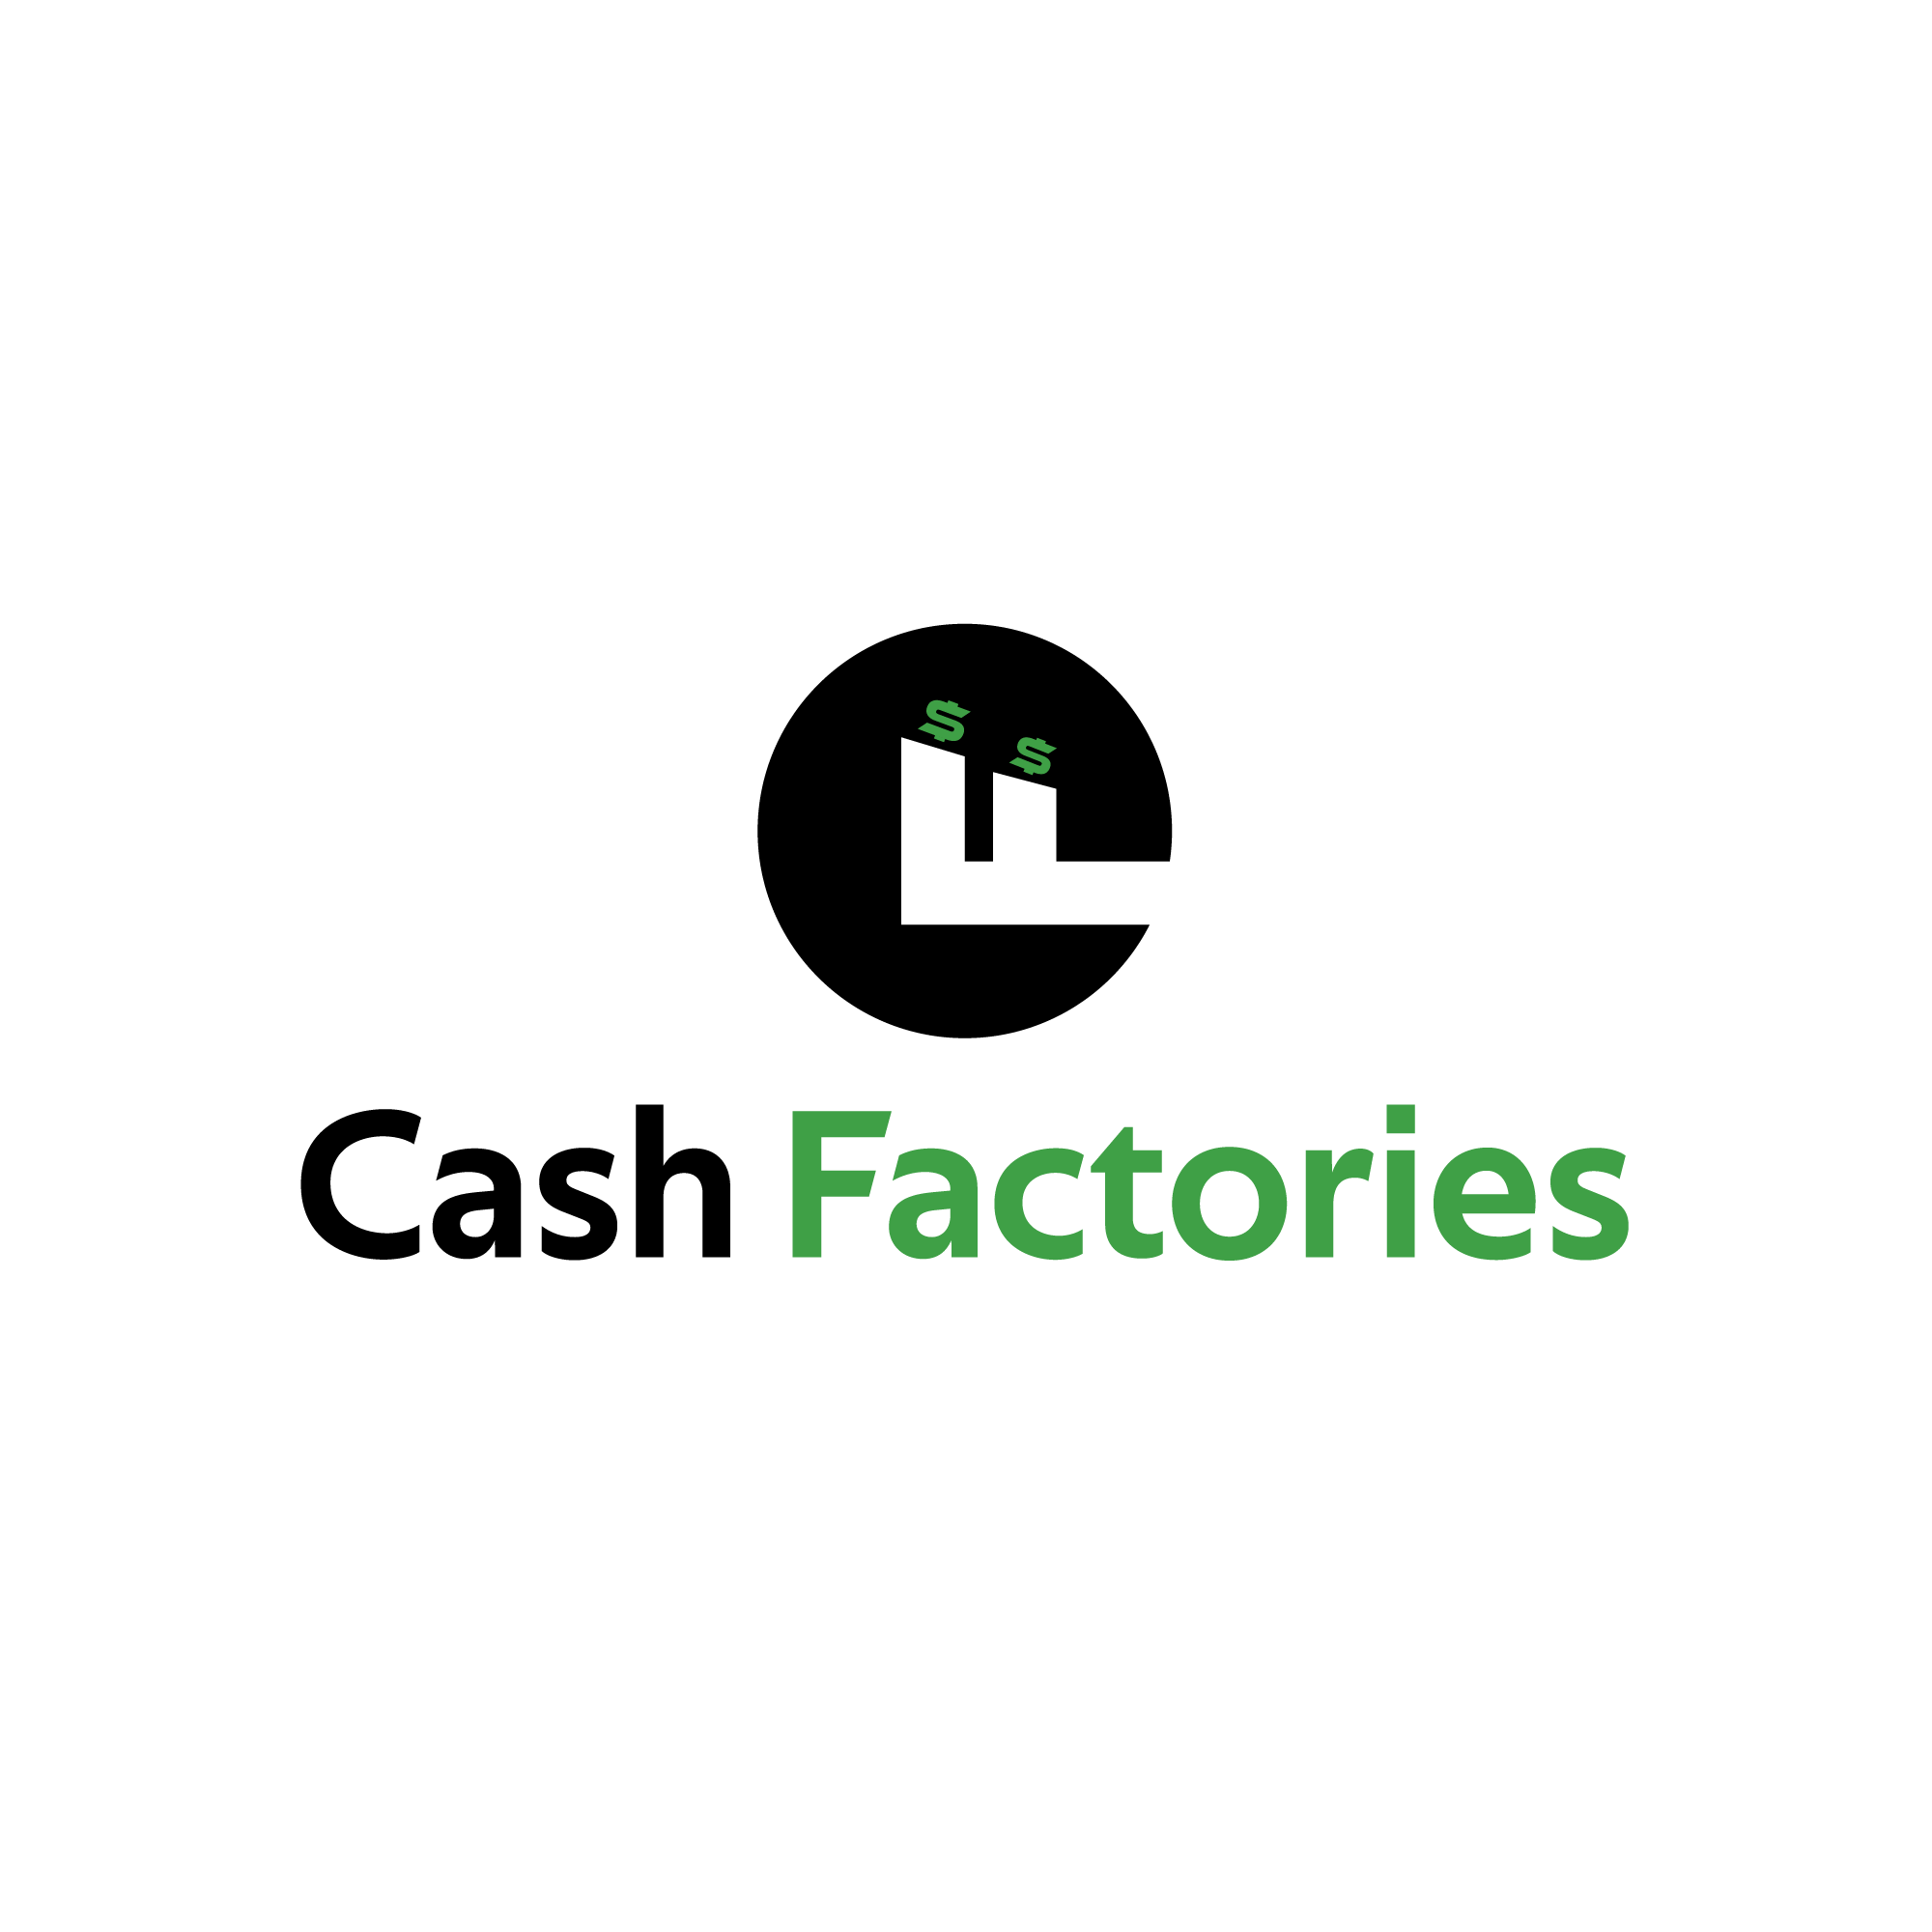 Cashfactories  - Company logo